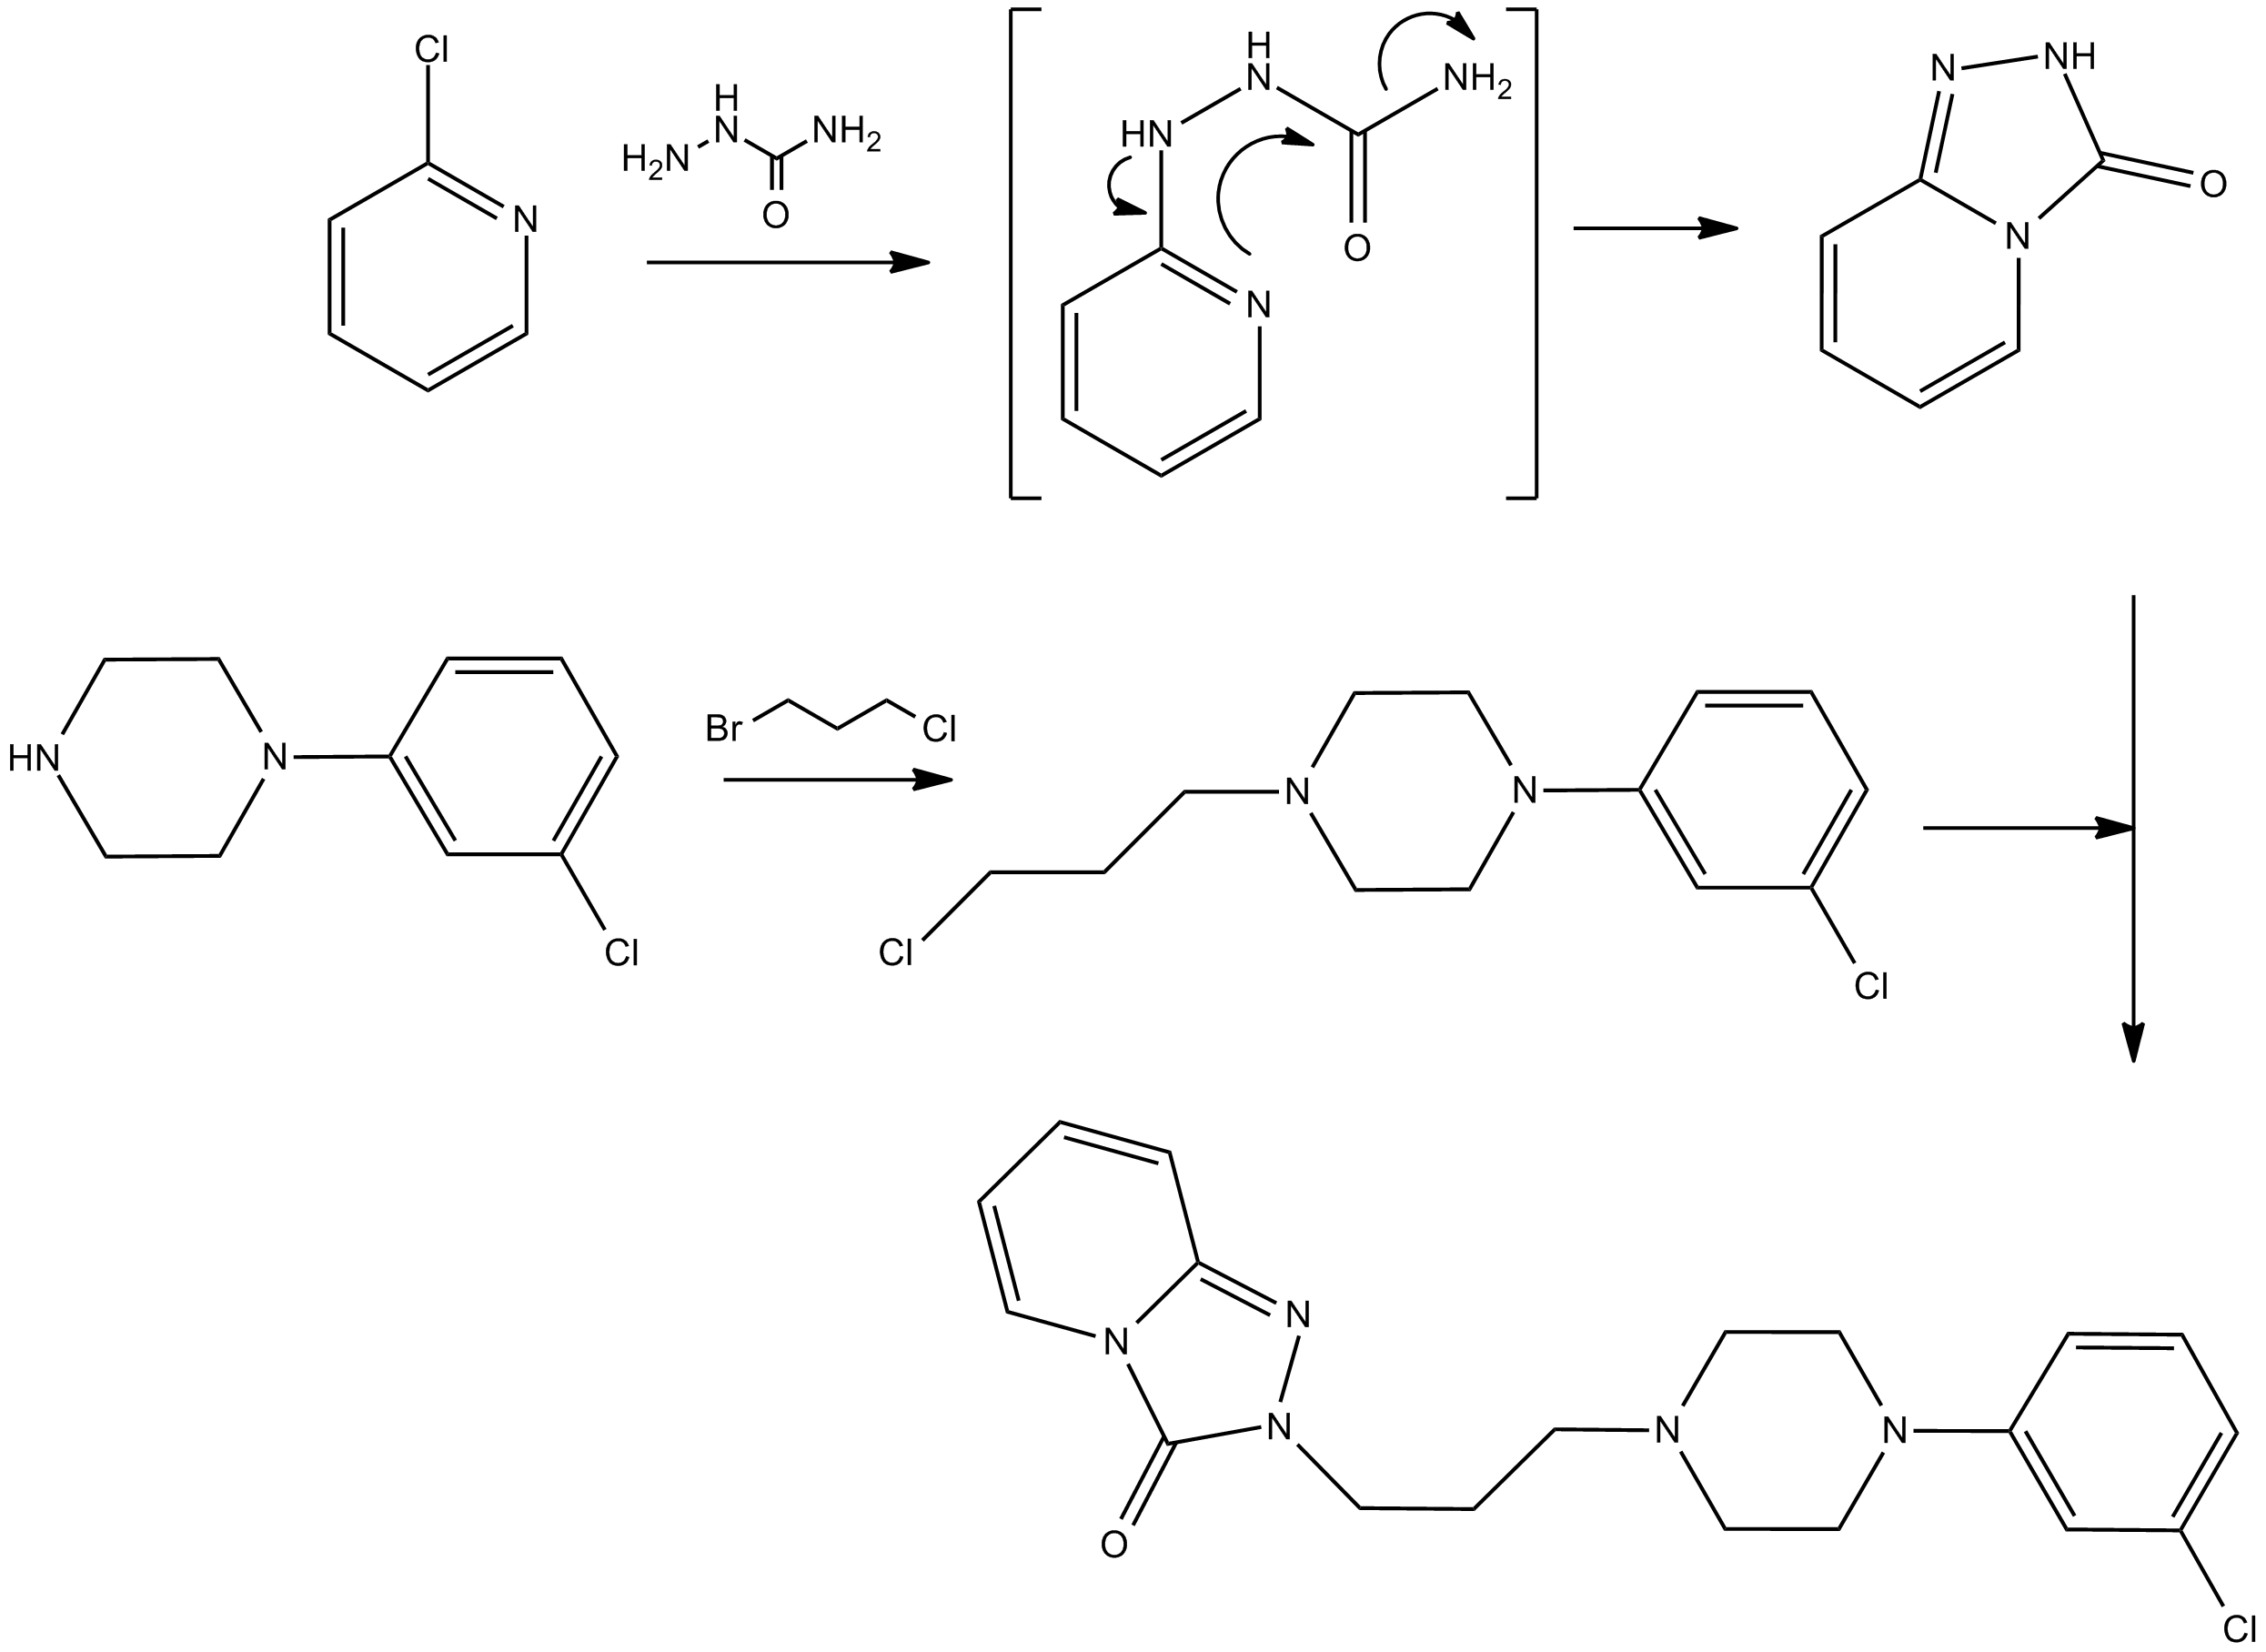 File:Benazepril synthesis.png